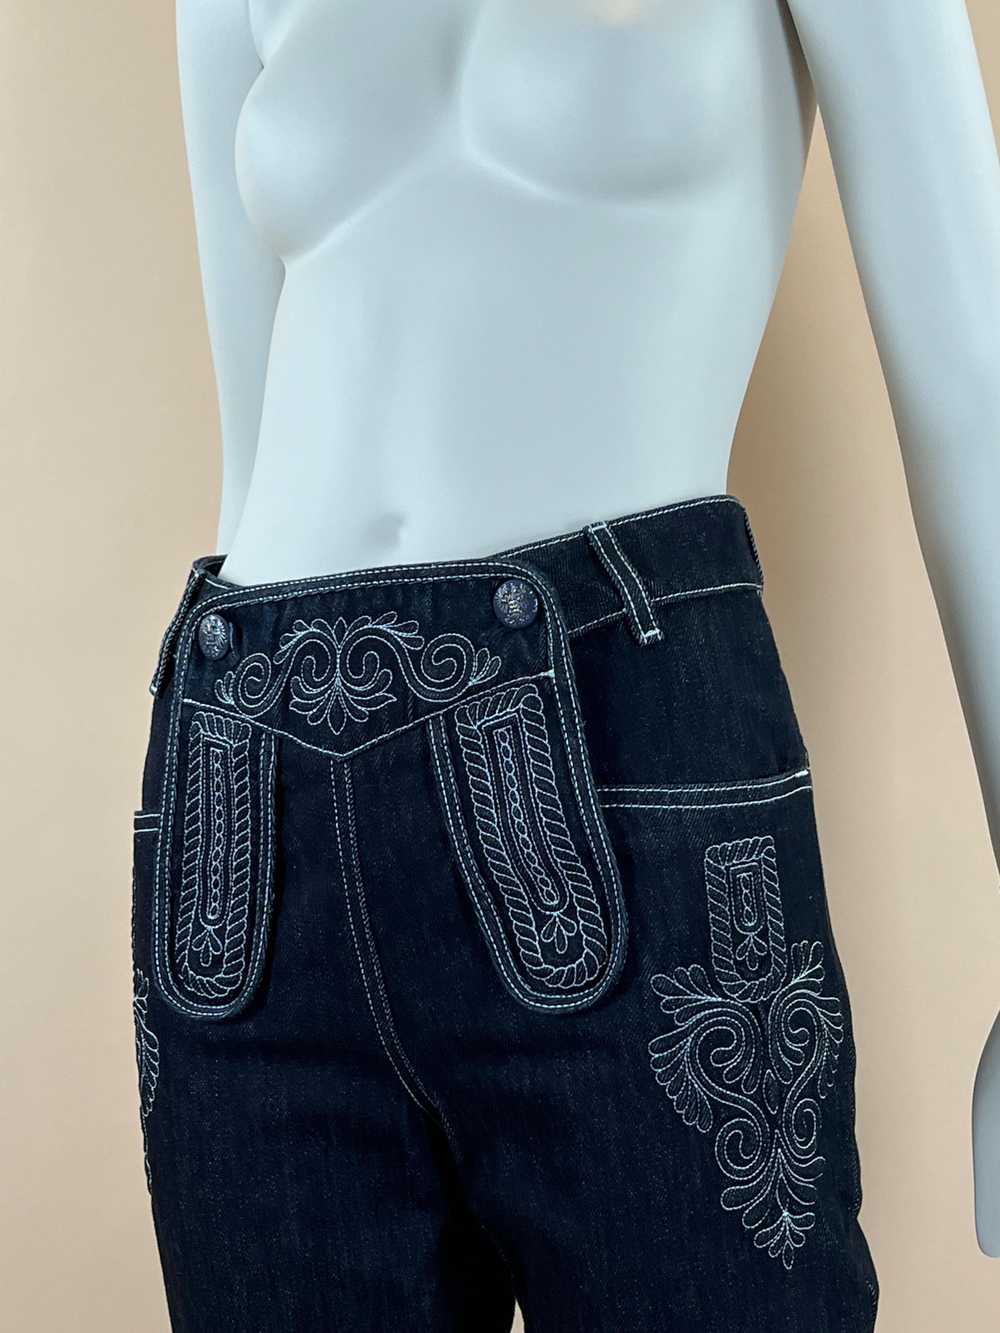 Chanel Paris/Salzburg Embroidered Crop Jeans - image 3